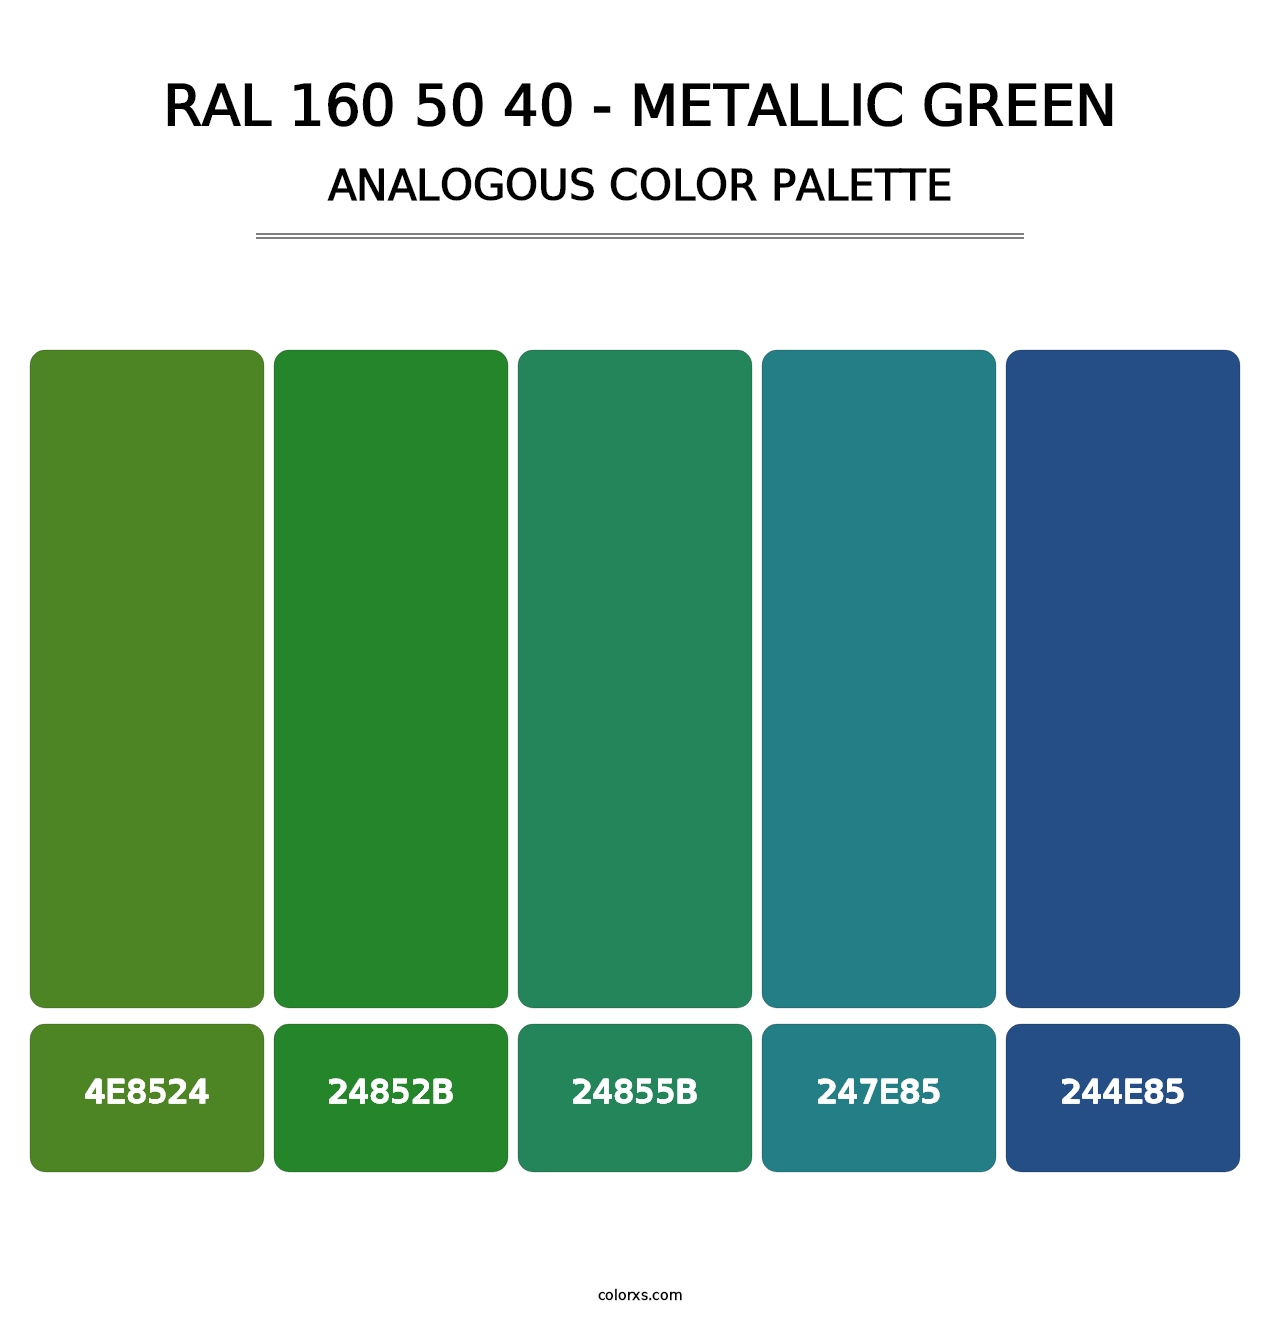 RAL 160 50 40 - Metallic Green - Analogous Color Palette